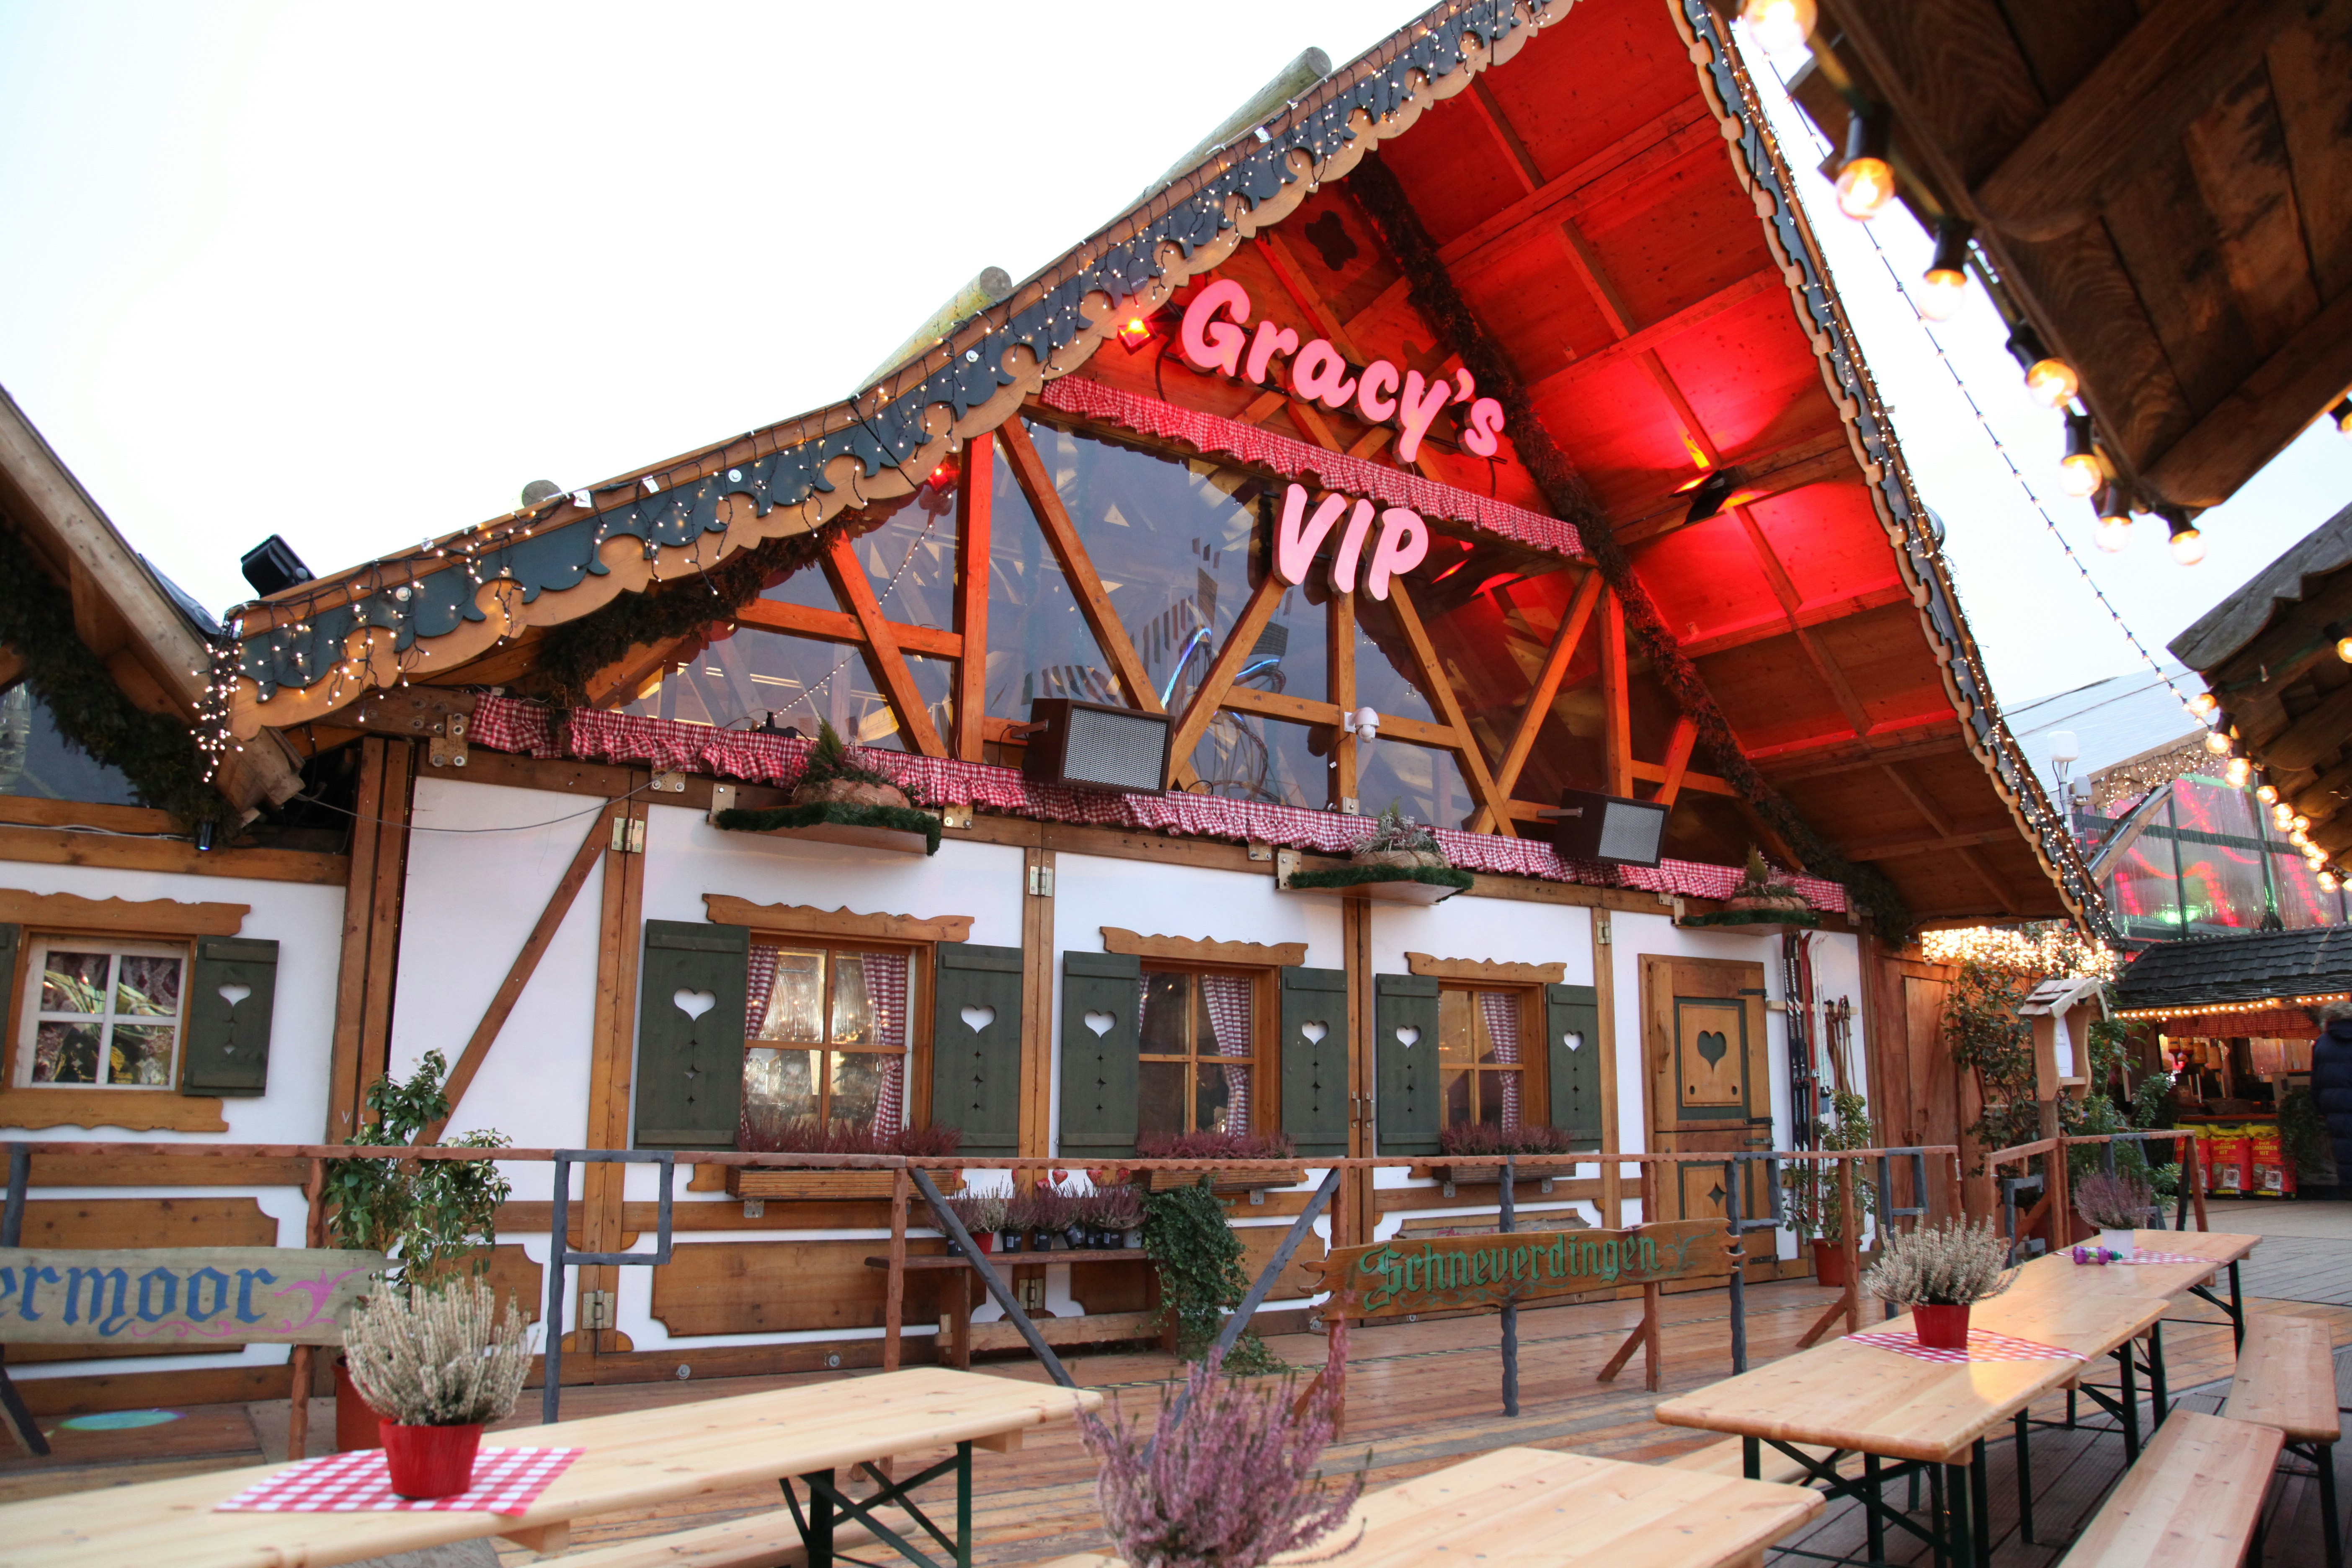 Bavarian Village - Gracy's VIP image 7